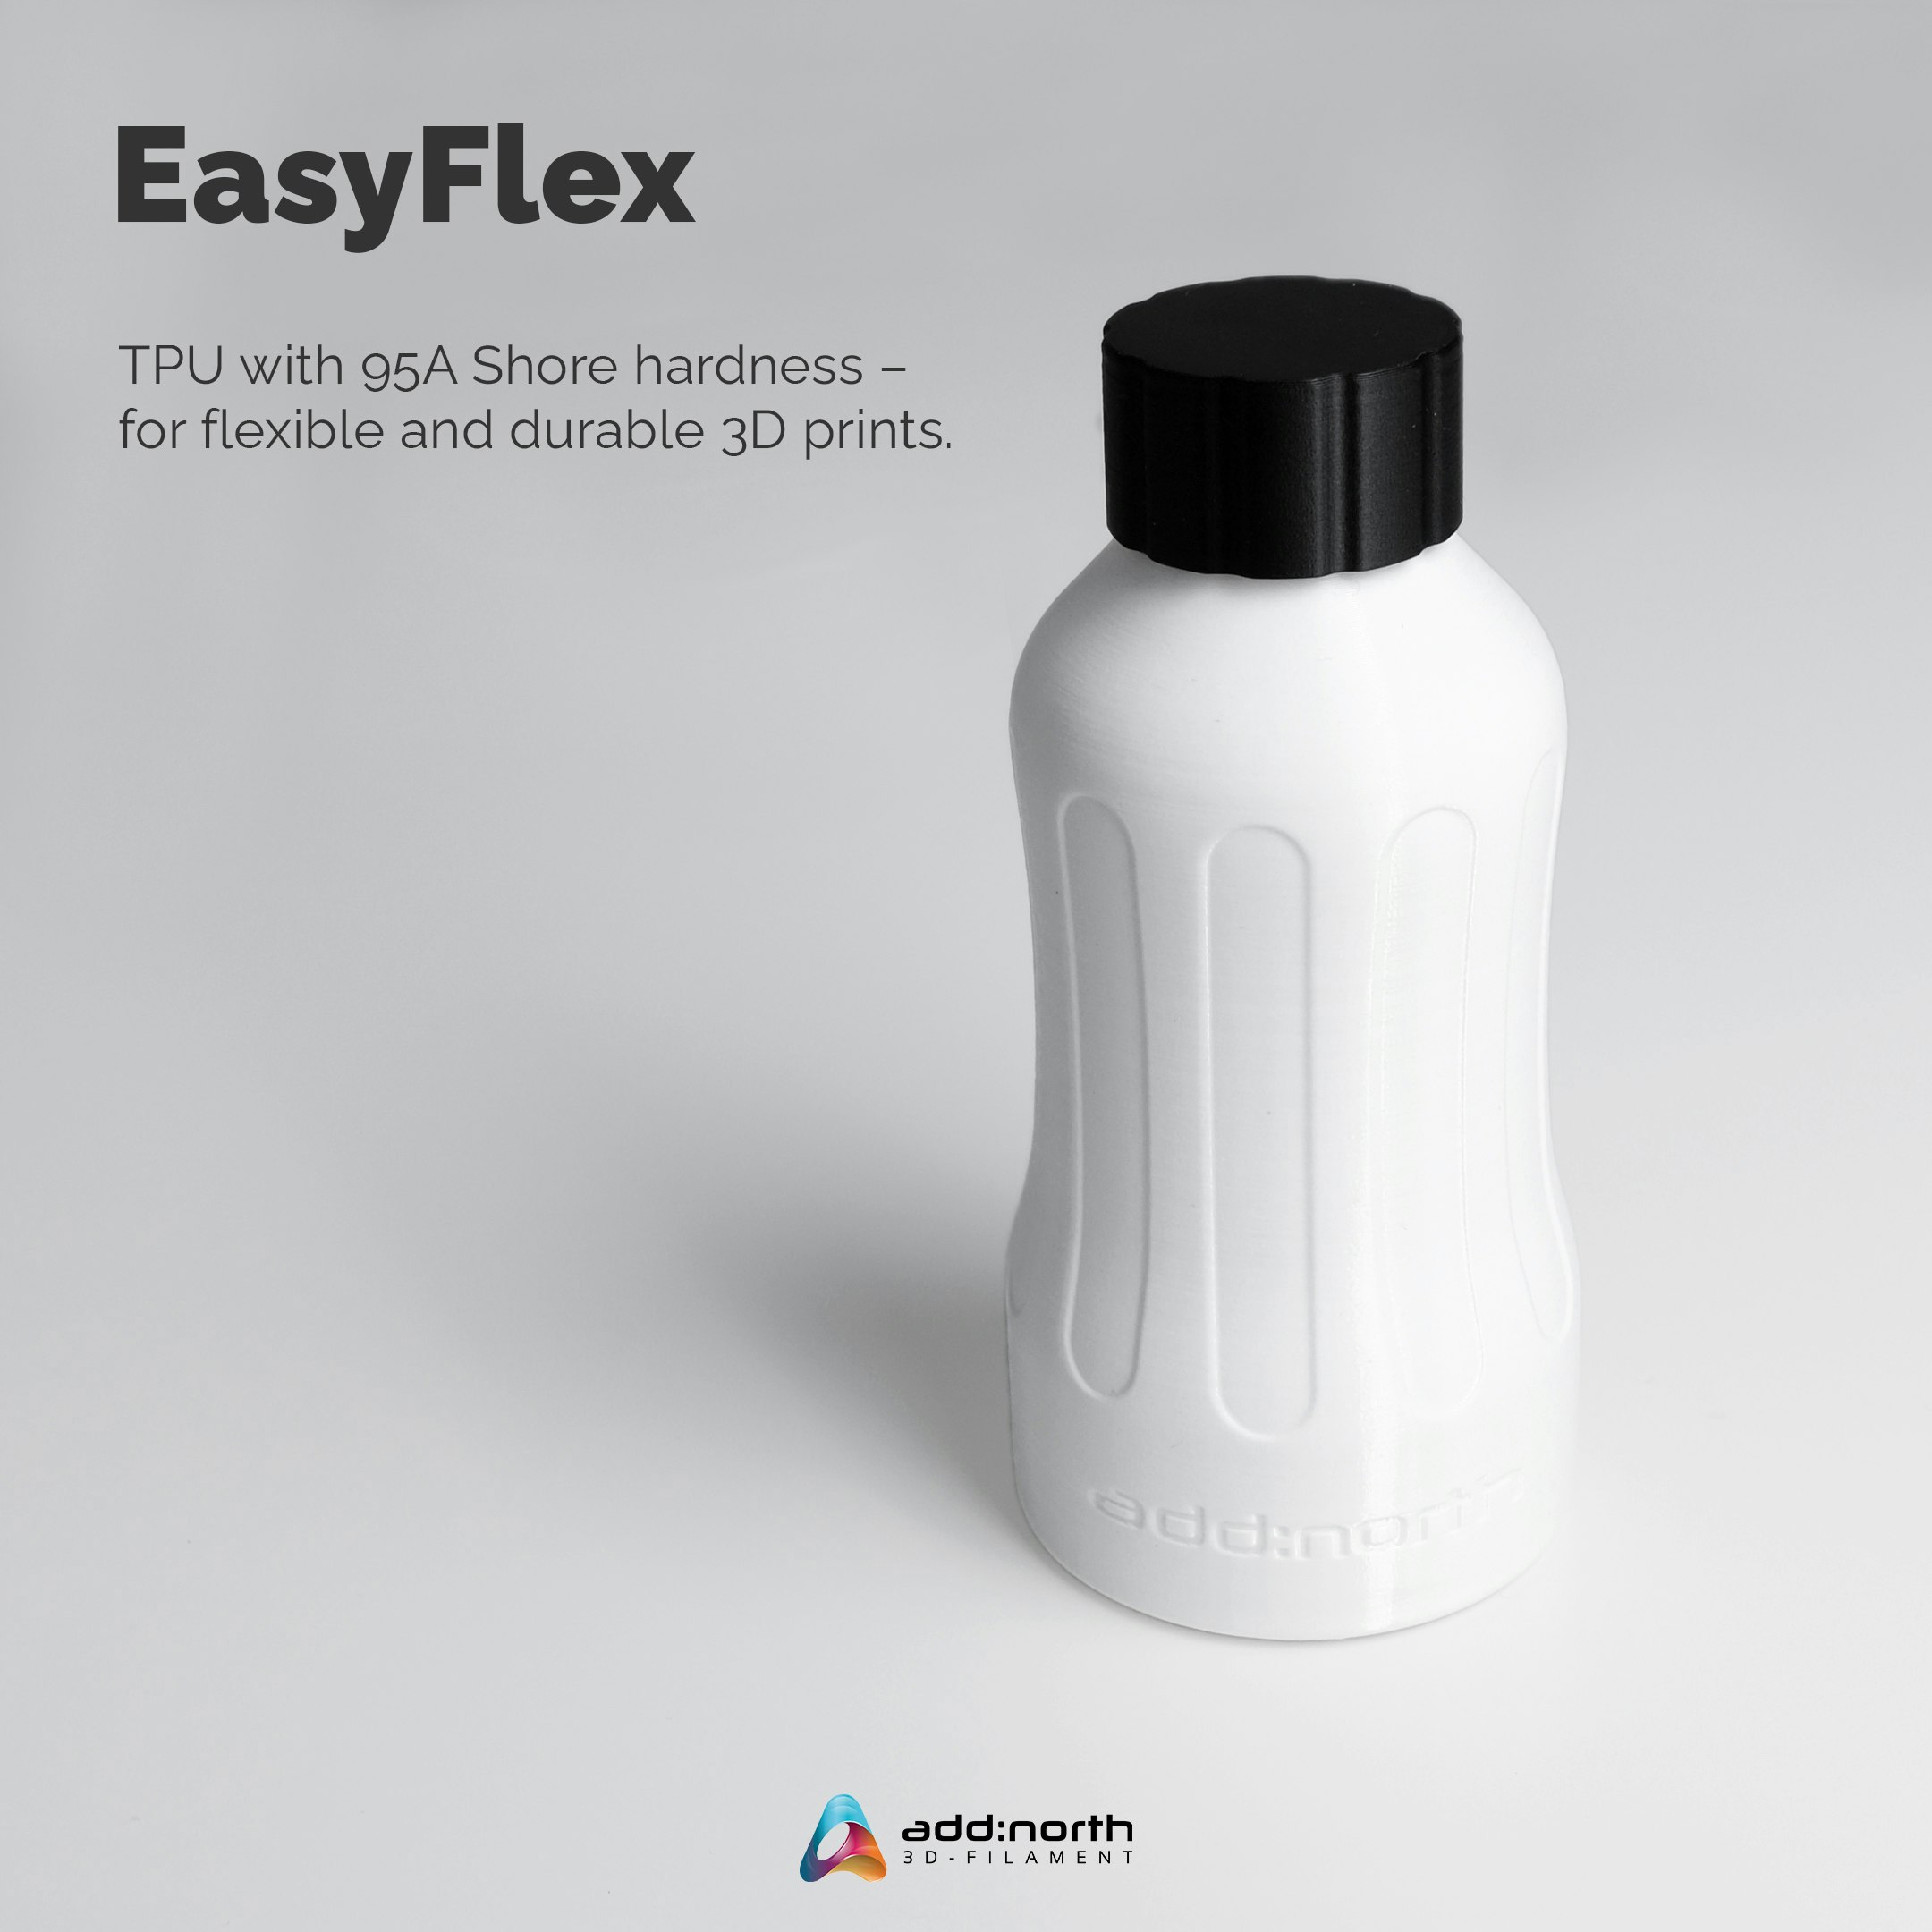 Addnorth Easyflex TPU-filament - Filament